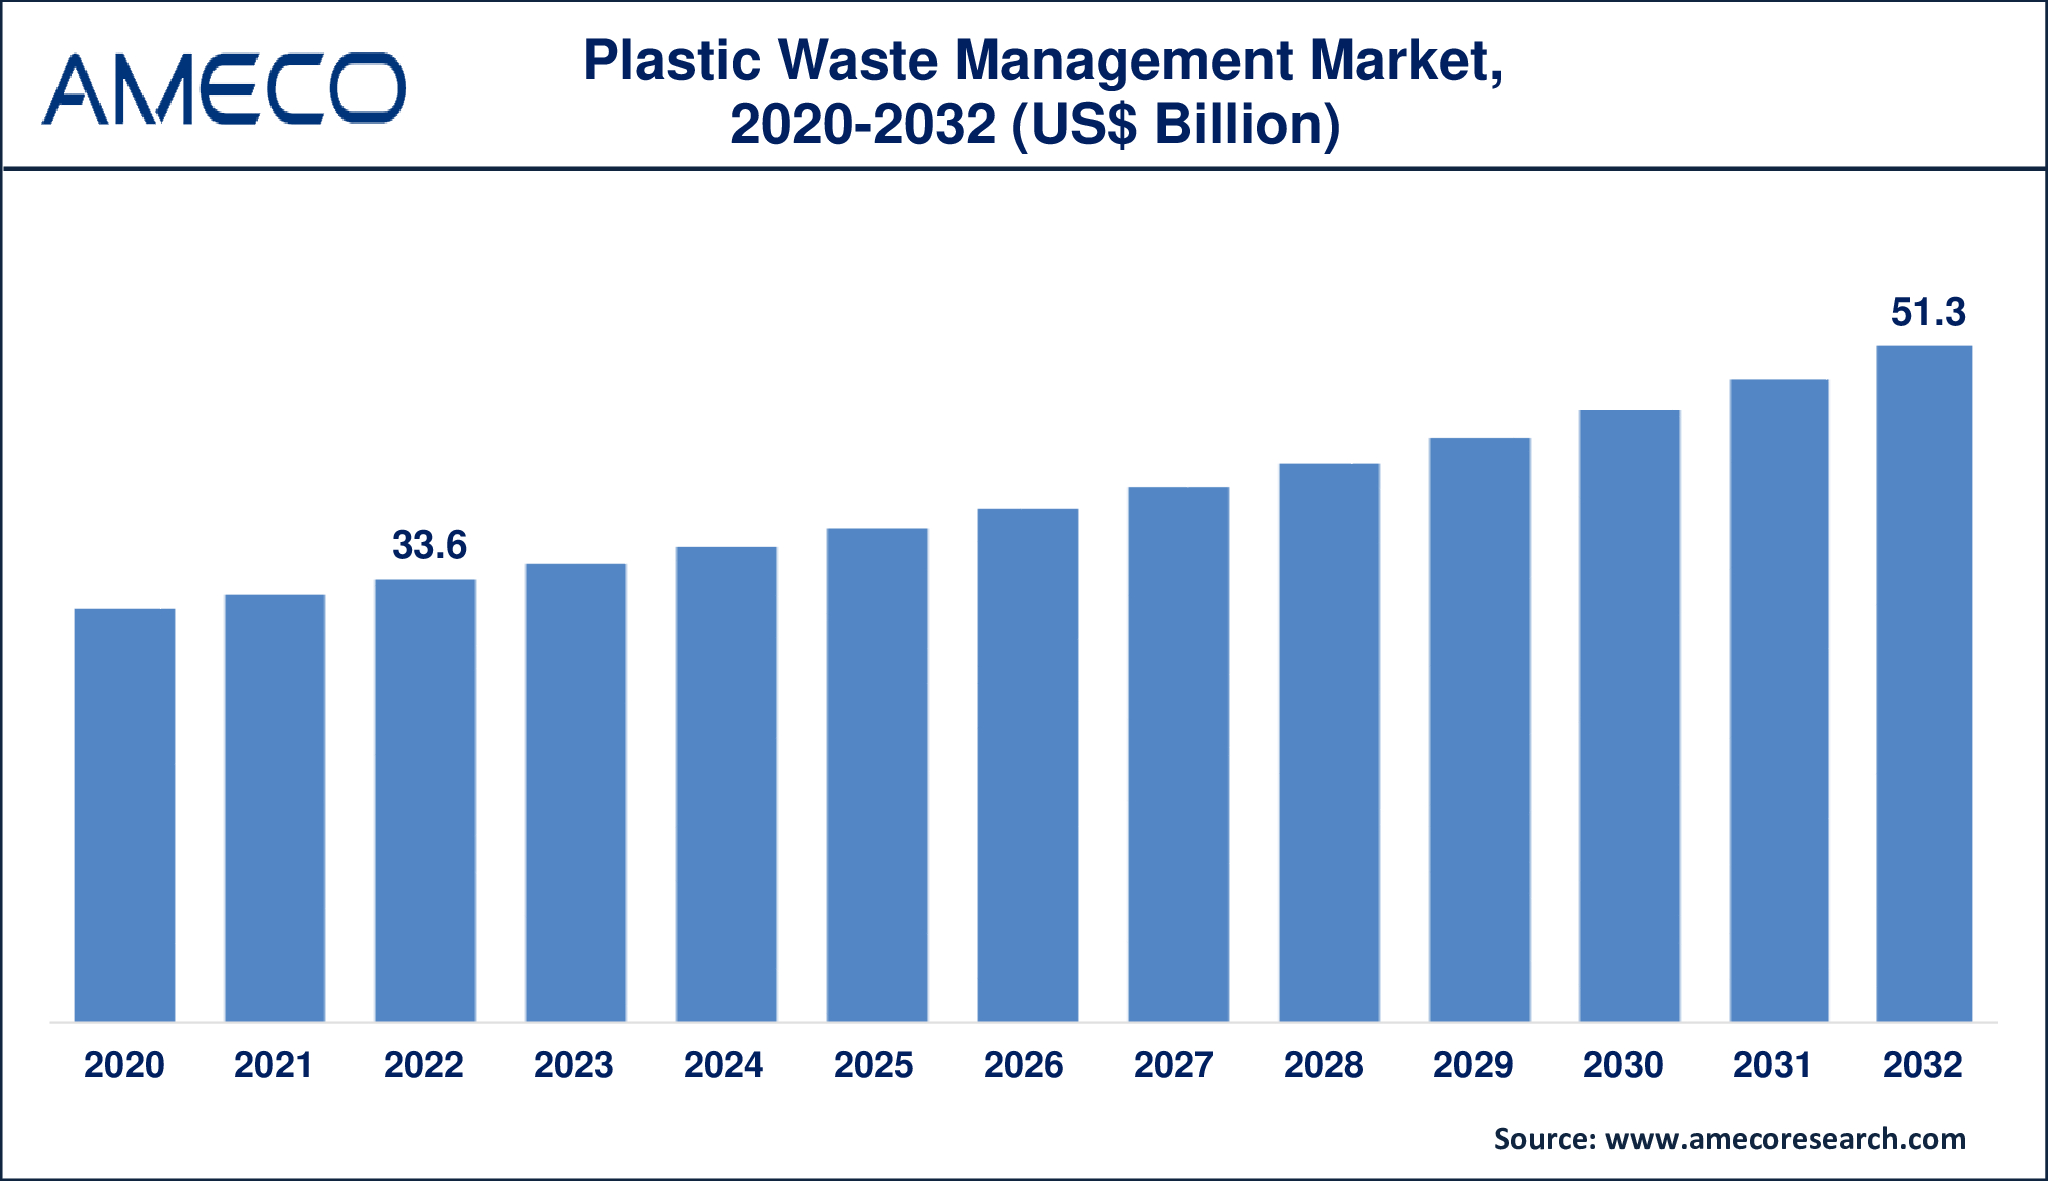 Plastic Waste Management Market Dynamics